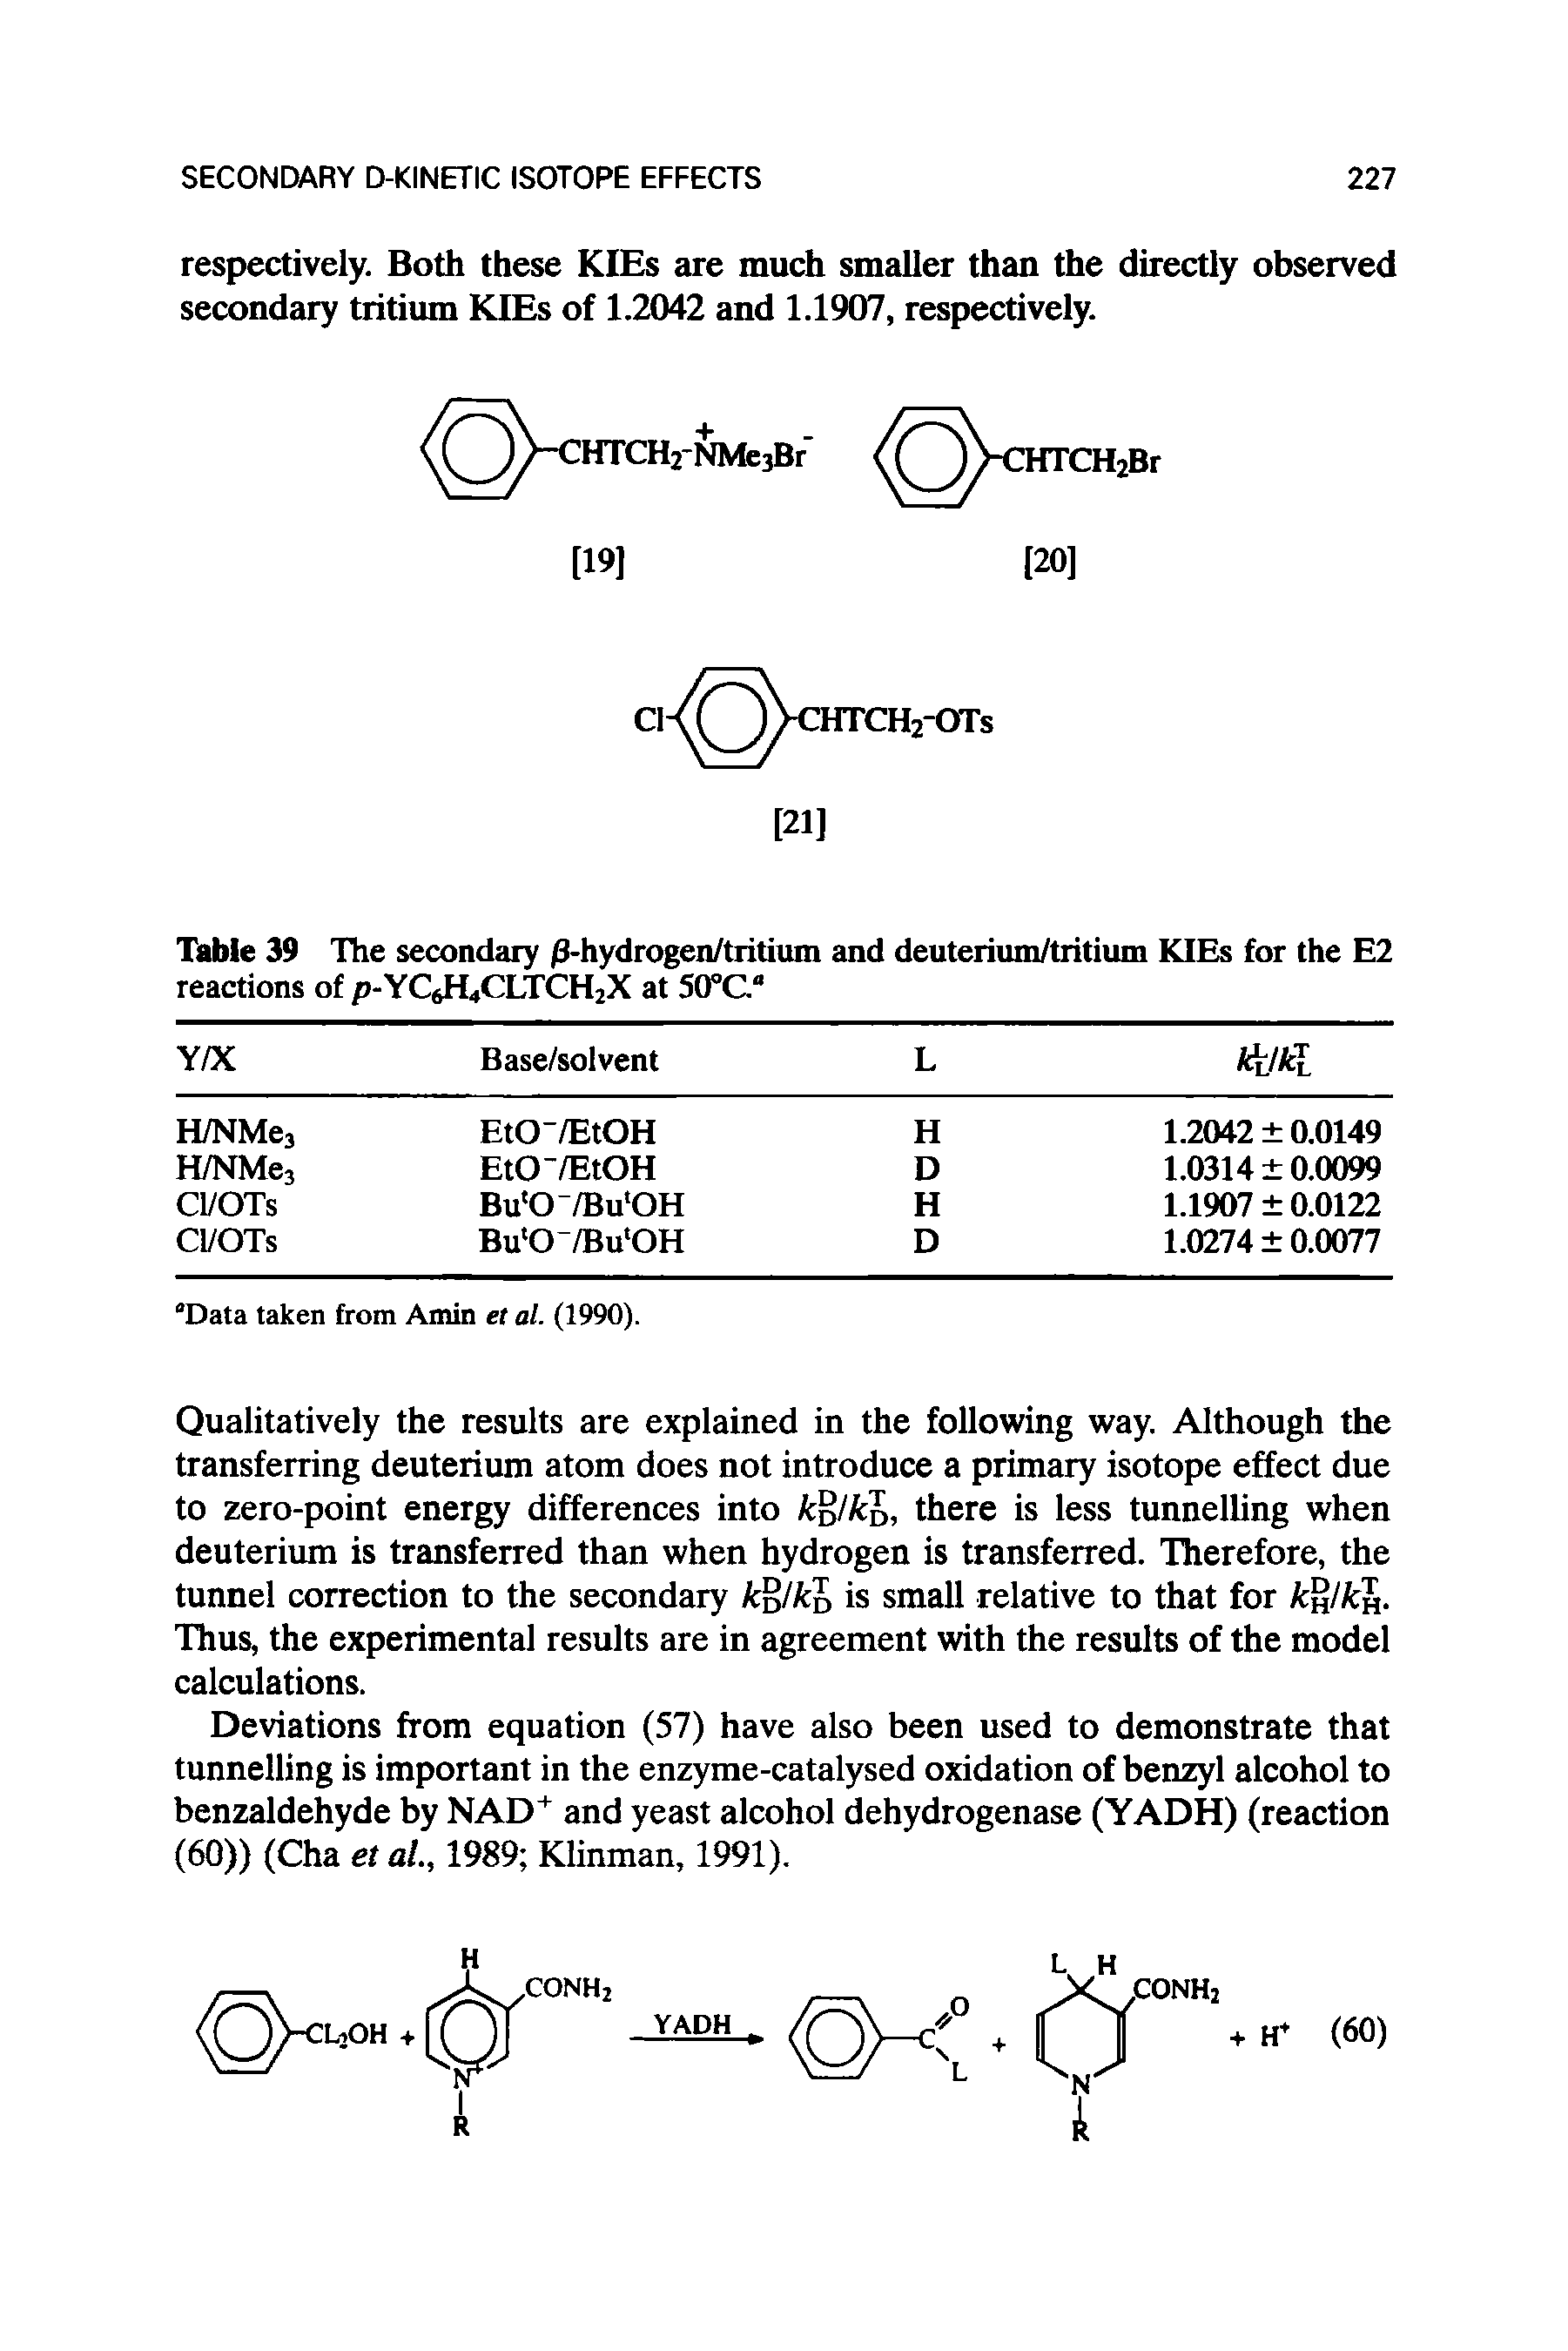 Table 39 The secondary /3-hydrogen/tritium and deuterium/tritium KIEs for the E2 reactions of p-YC CLTCHjX at 50°Ca...